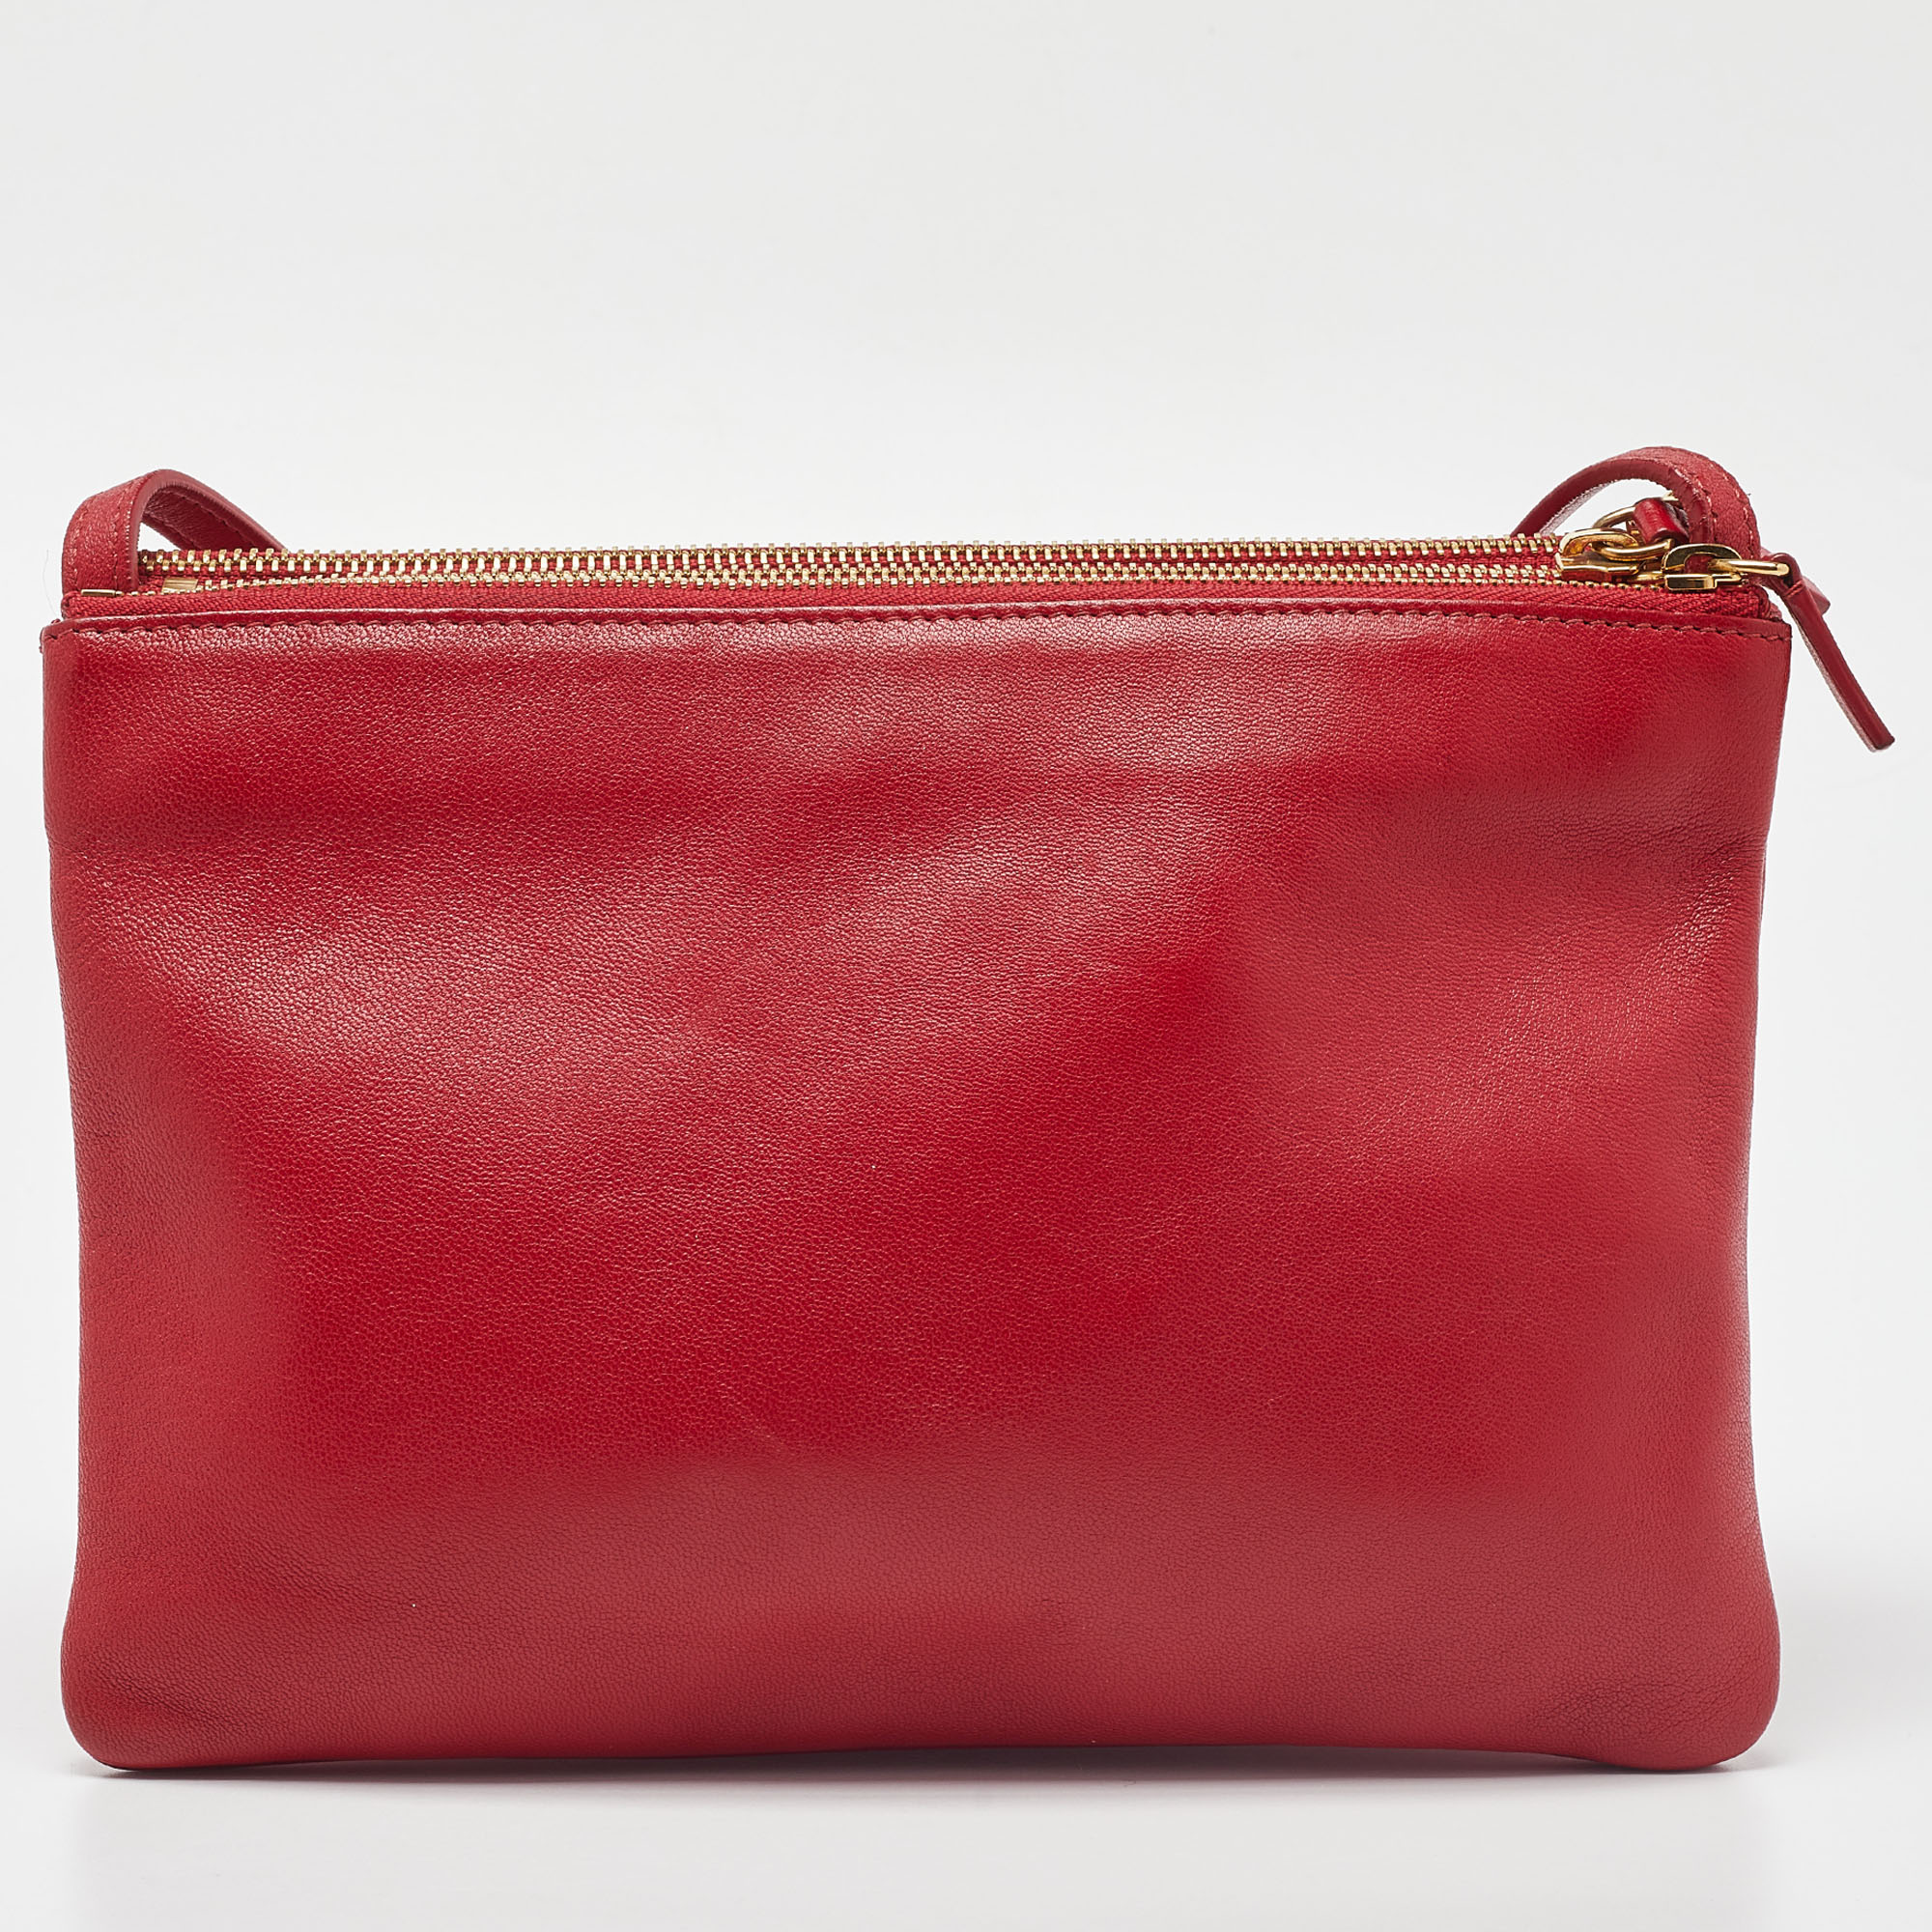 Celine Red Leather Large Trio Zip Crossbody Bag